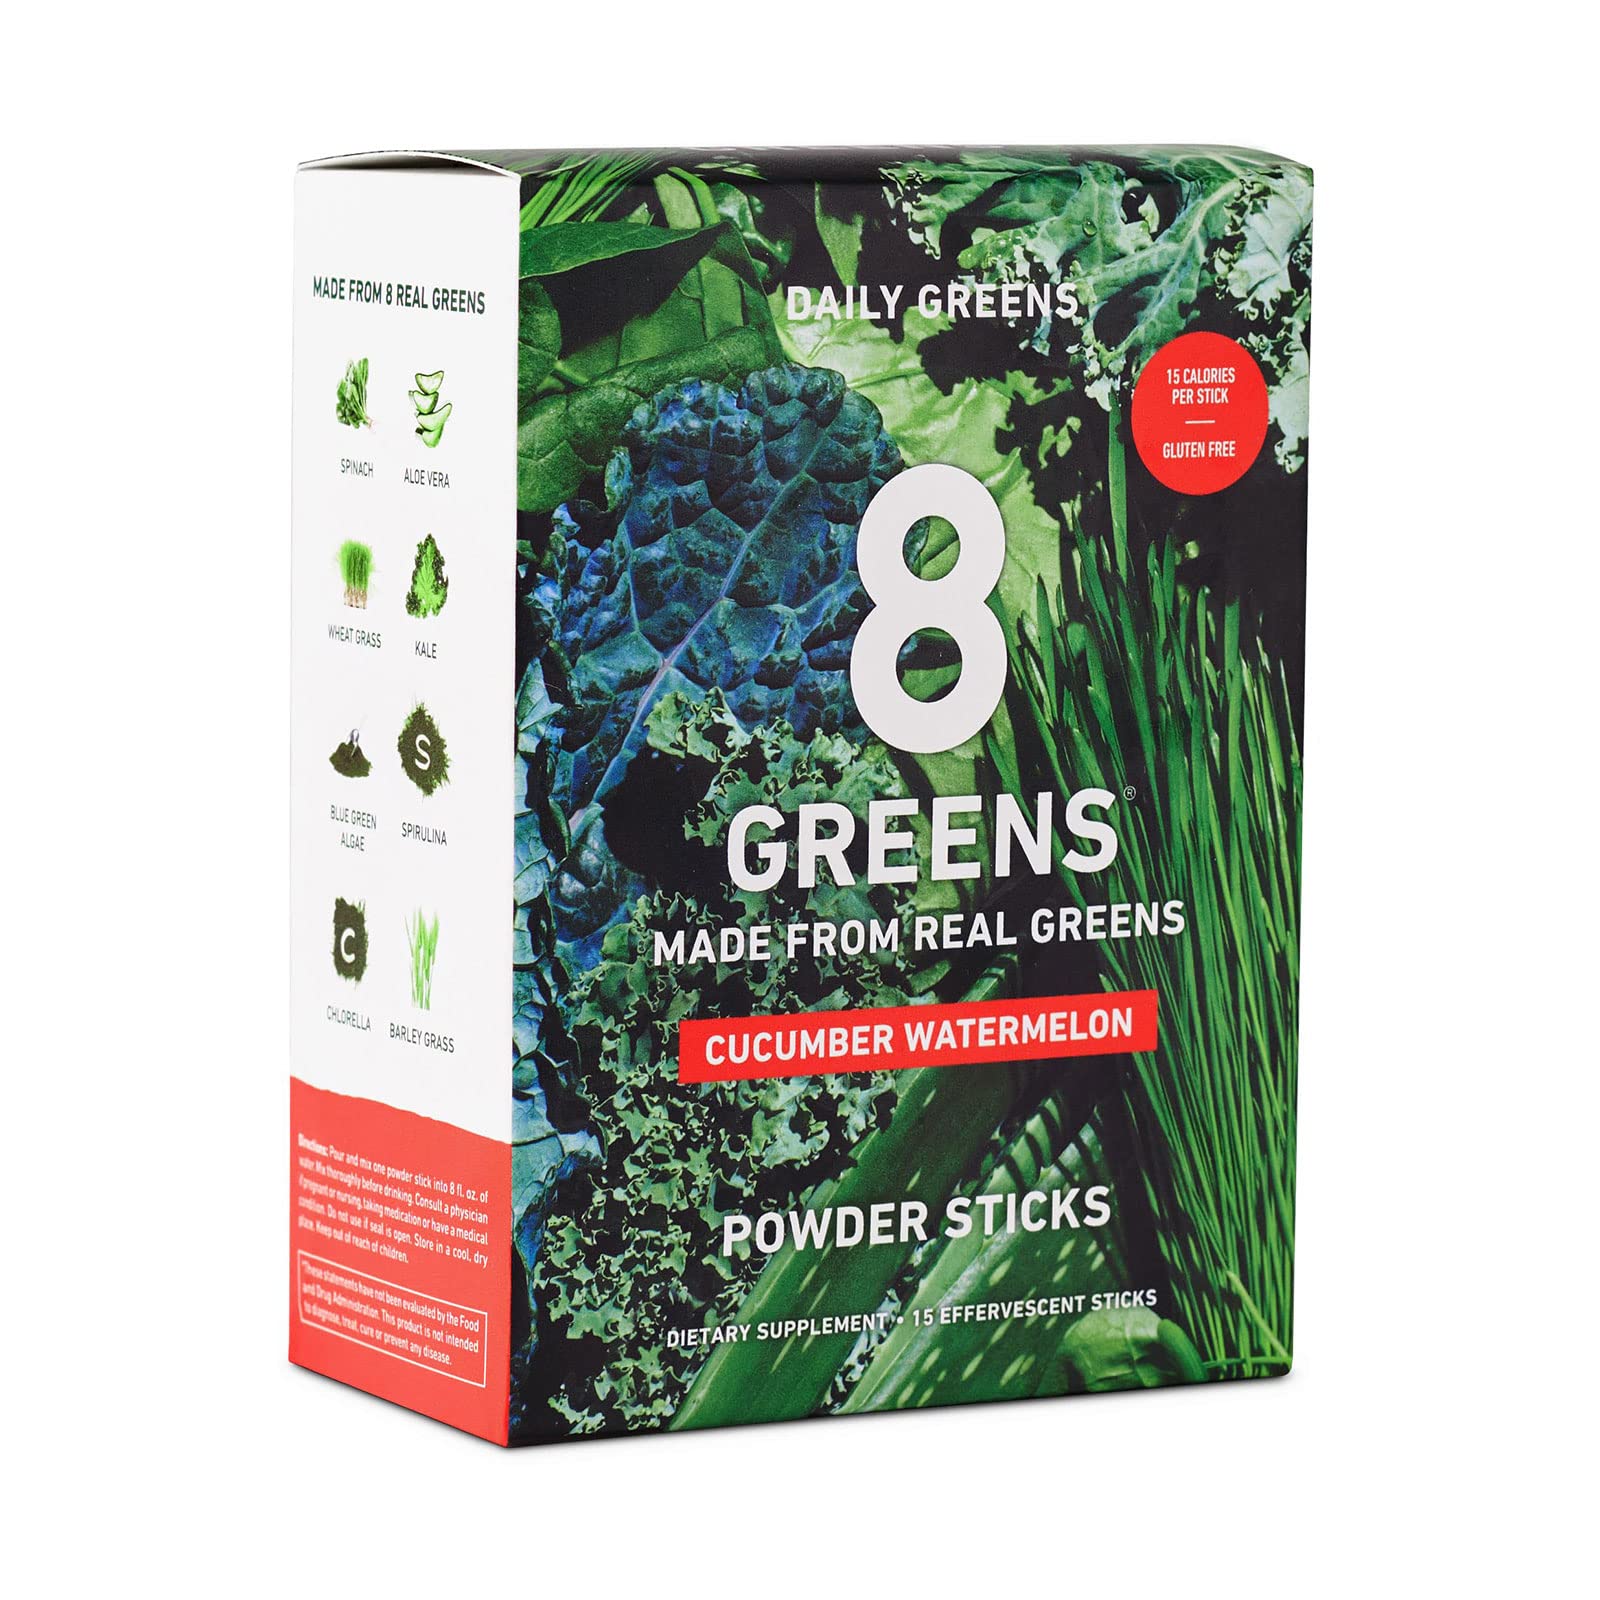 8Greens Daily Powder Sticks - Daily Superfood- Super Greens Vitamins, Vegan, Gluten Free, Non-GMO, Variety Pack (Pack of 15 Sticks)